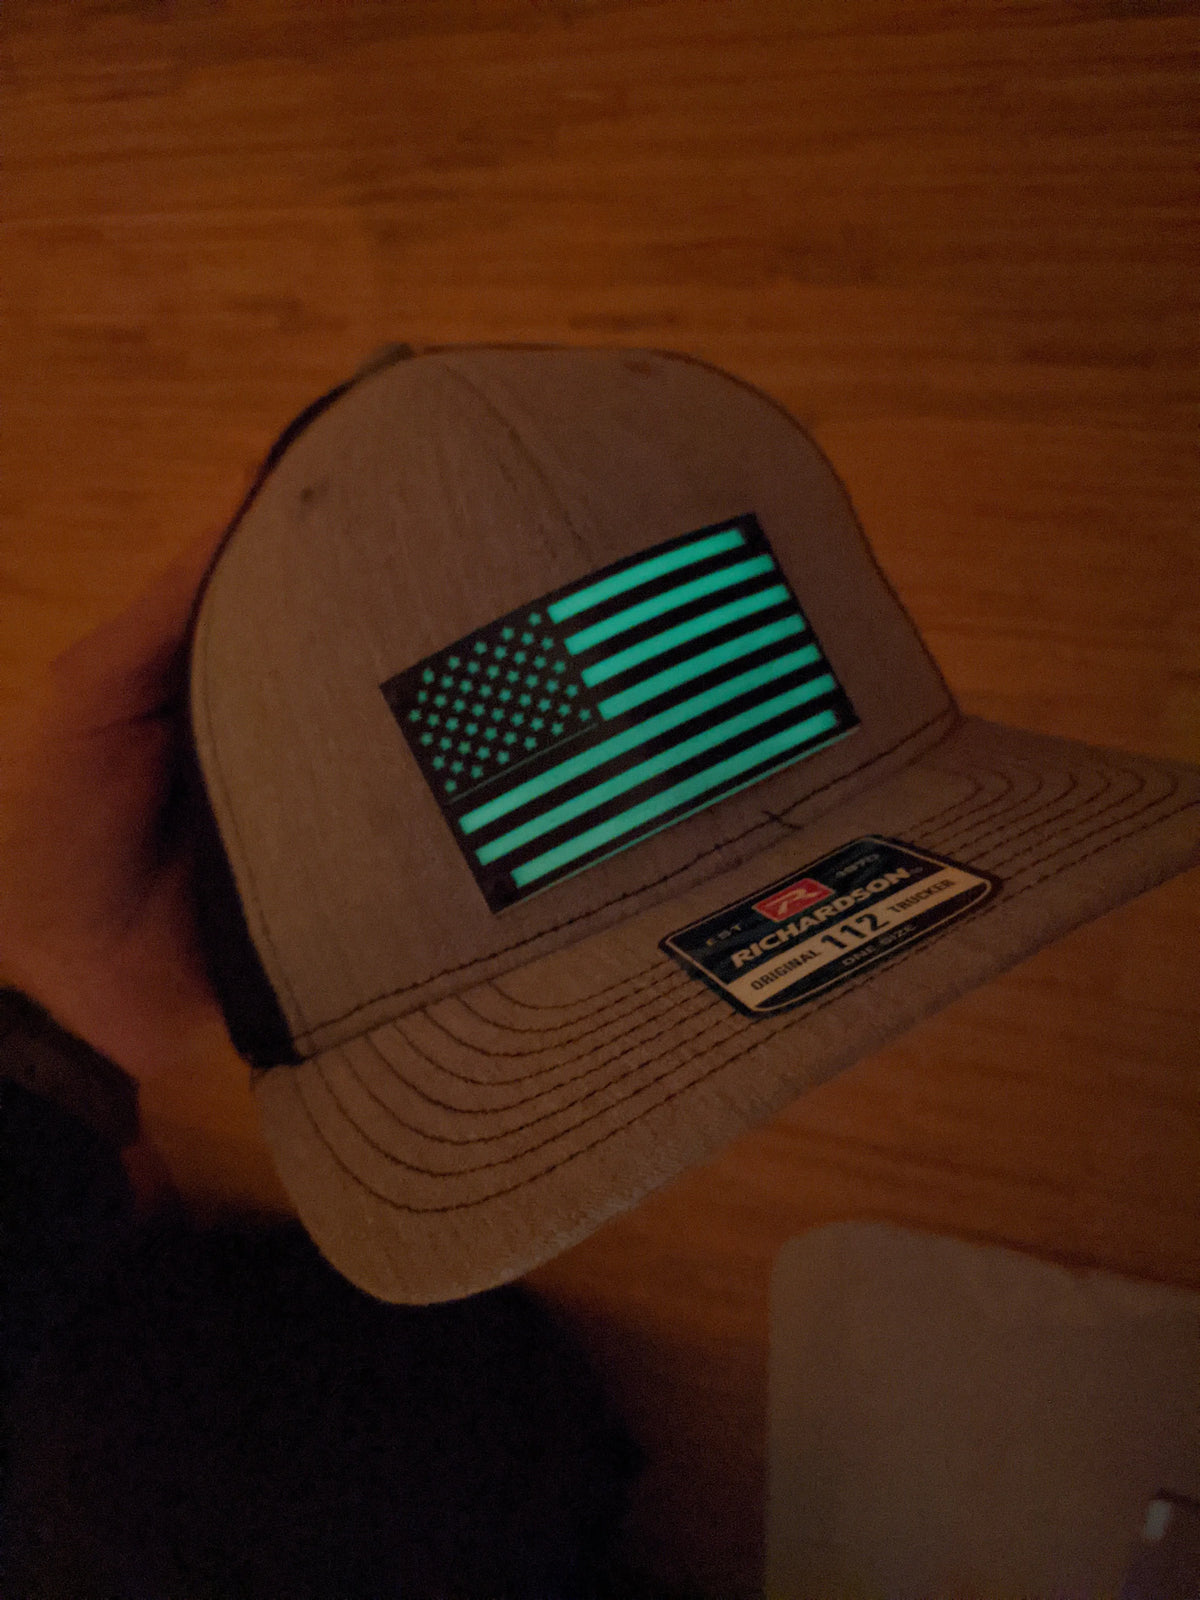 American Flag Badge Hat - Black and Glow Badge